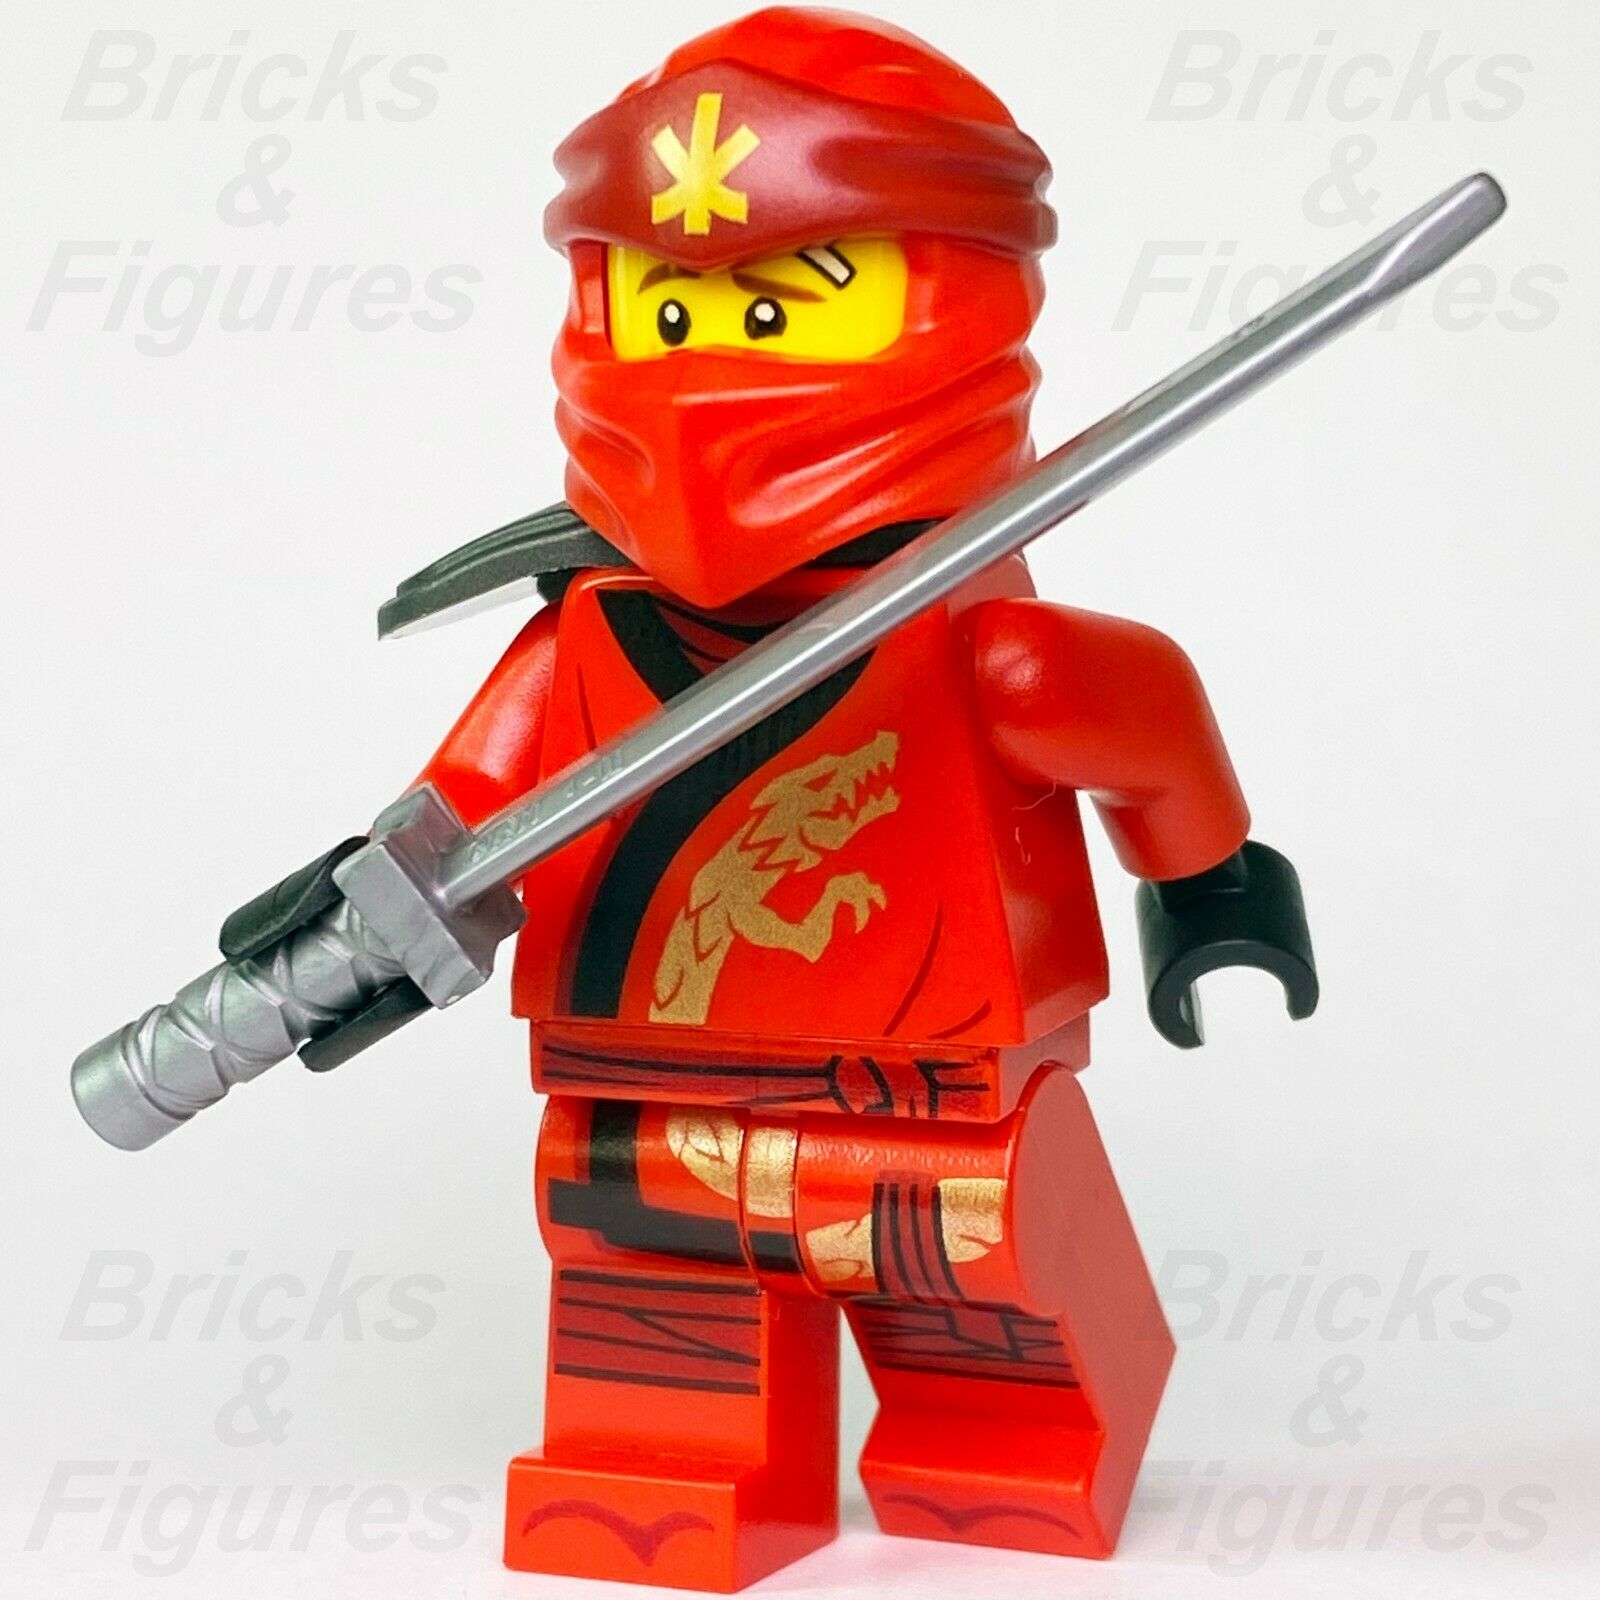 New Ninjago LEGO Kai Secrets of the Forbidden Spinjitzu Ninja Minifigure 40342 - Bricks & Figures